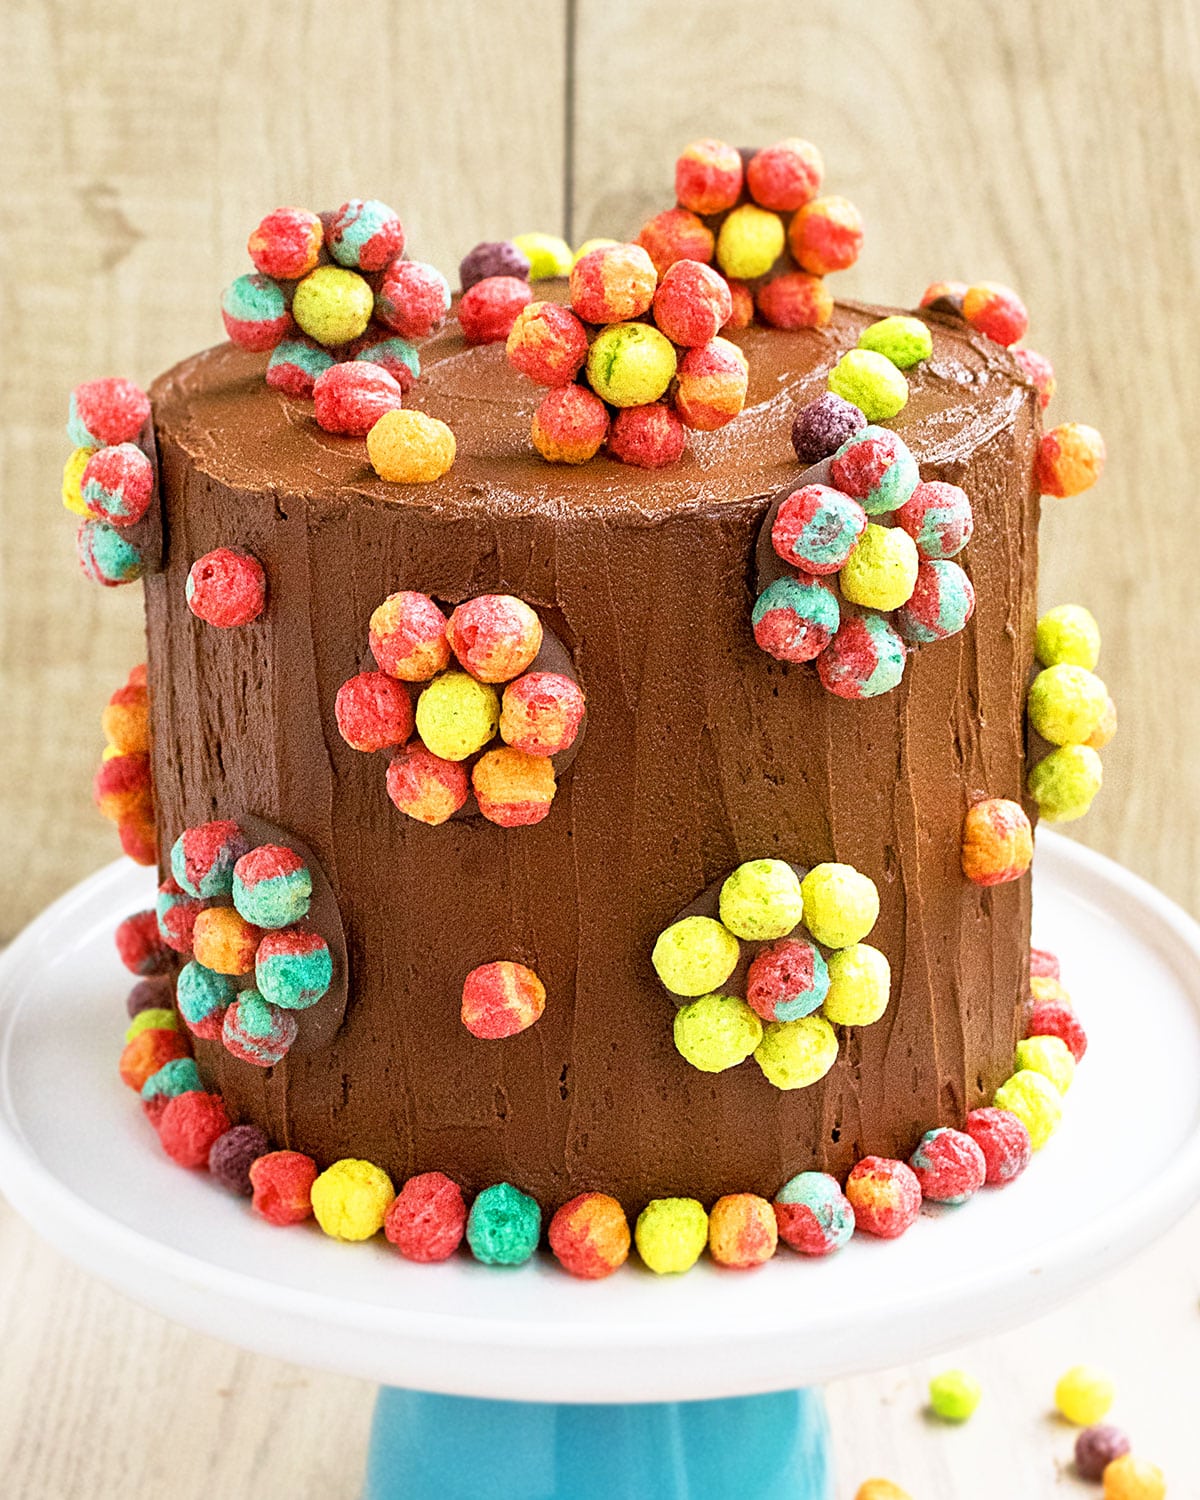 21 Simple Yet Impressive Kid Birthday Cake Ideas - XO, Katie Rosario